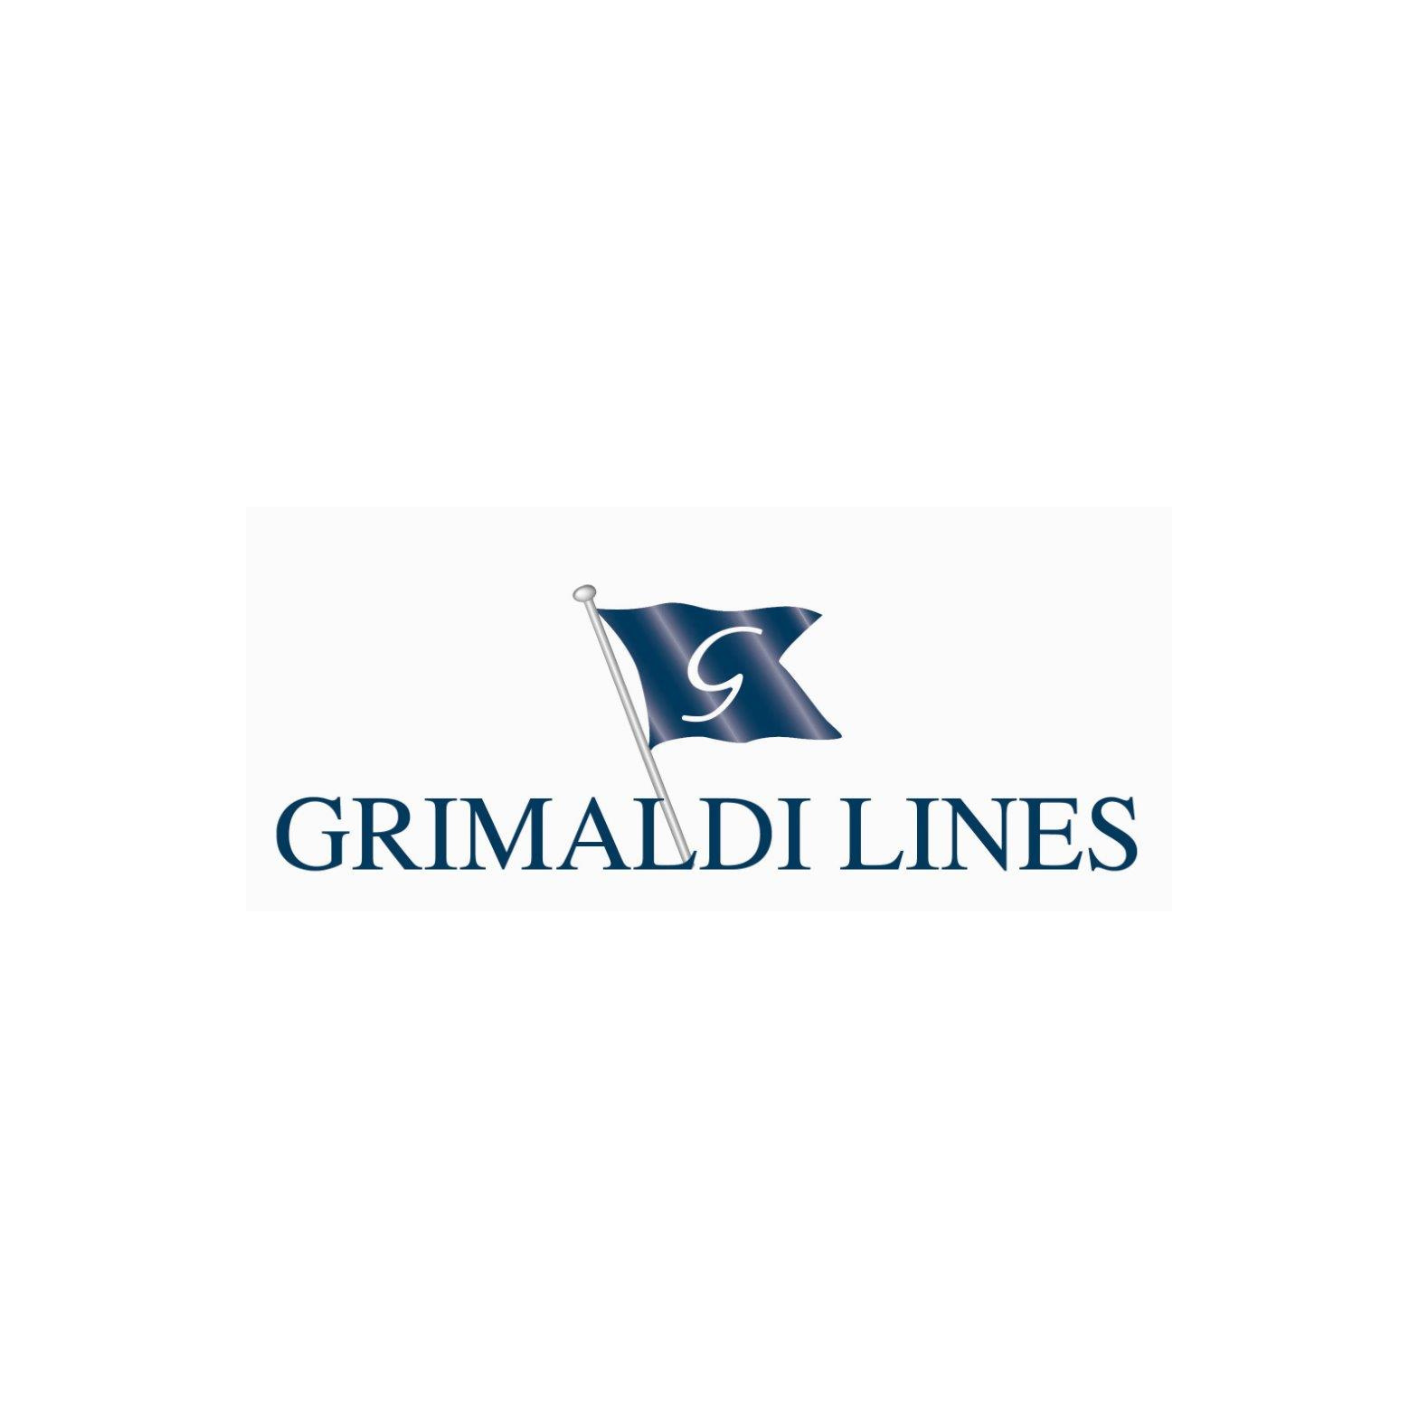 Grimaldi-lines-logo